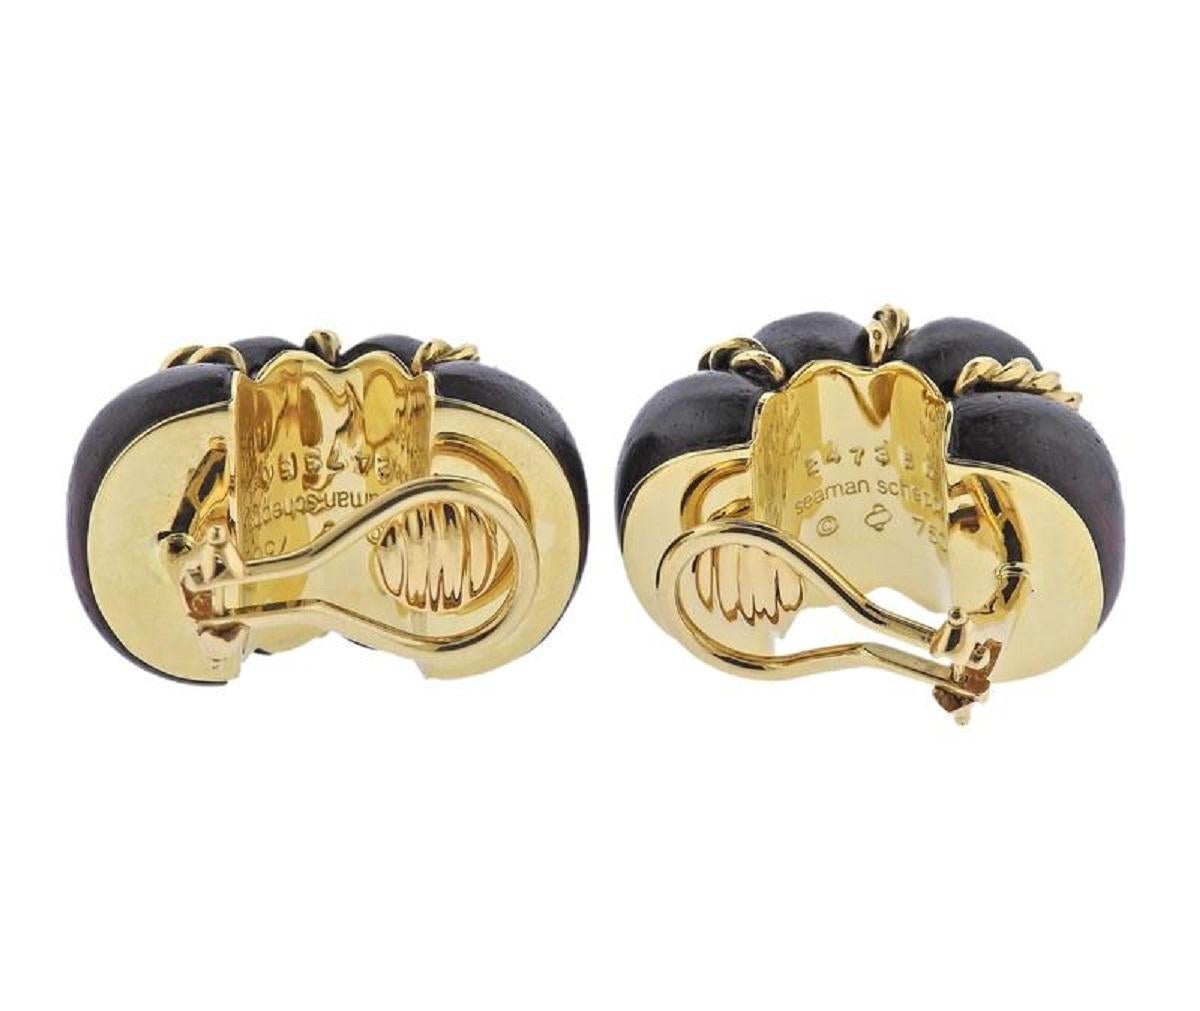 Seaman Schepps Shrimp Rosewood Gold Earrings In New Condition For Sale In Lambertville, NJ